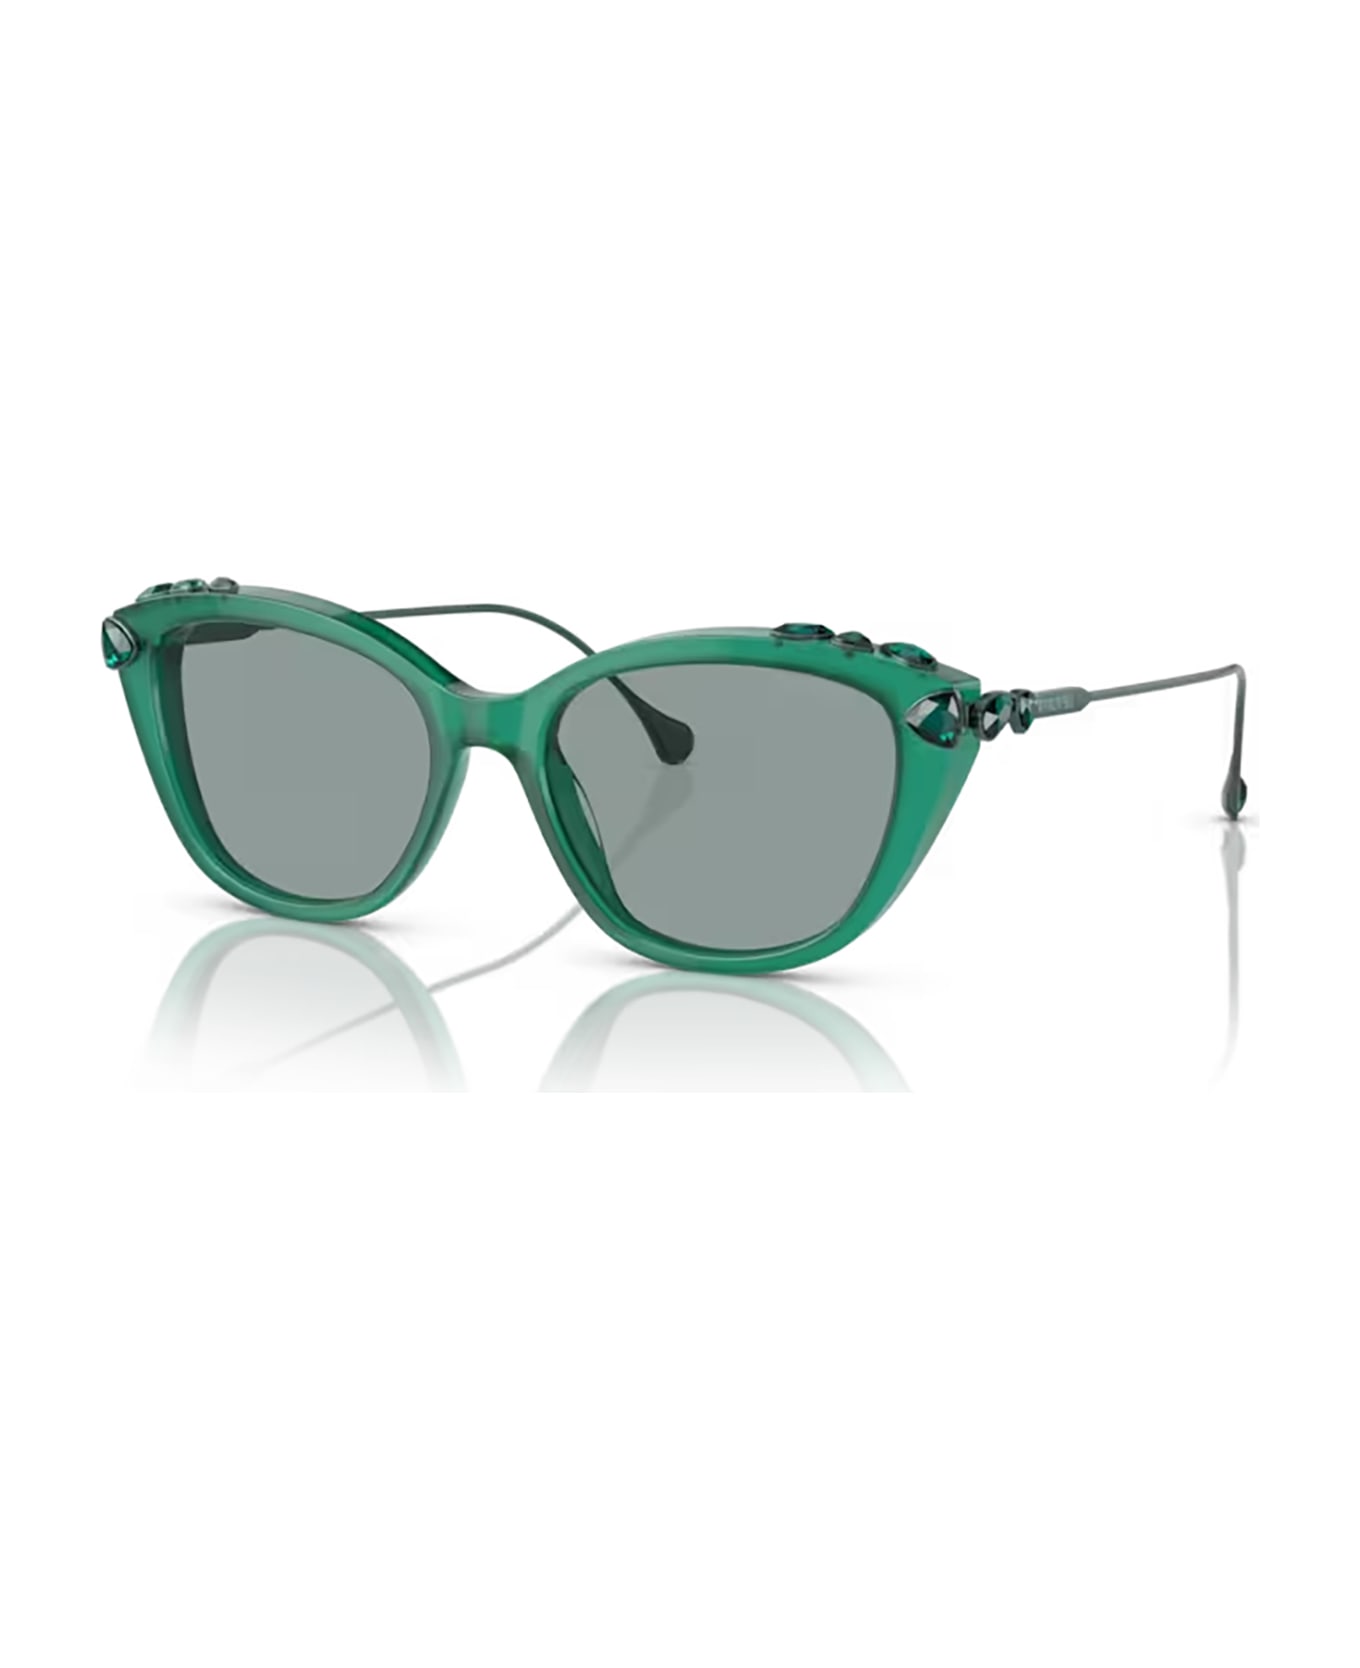 Swarovski Sk6010 Opal Green Sunglasses - Opal Green